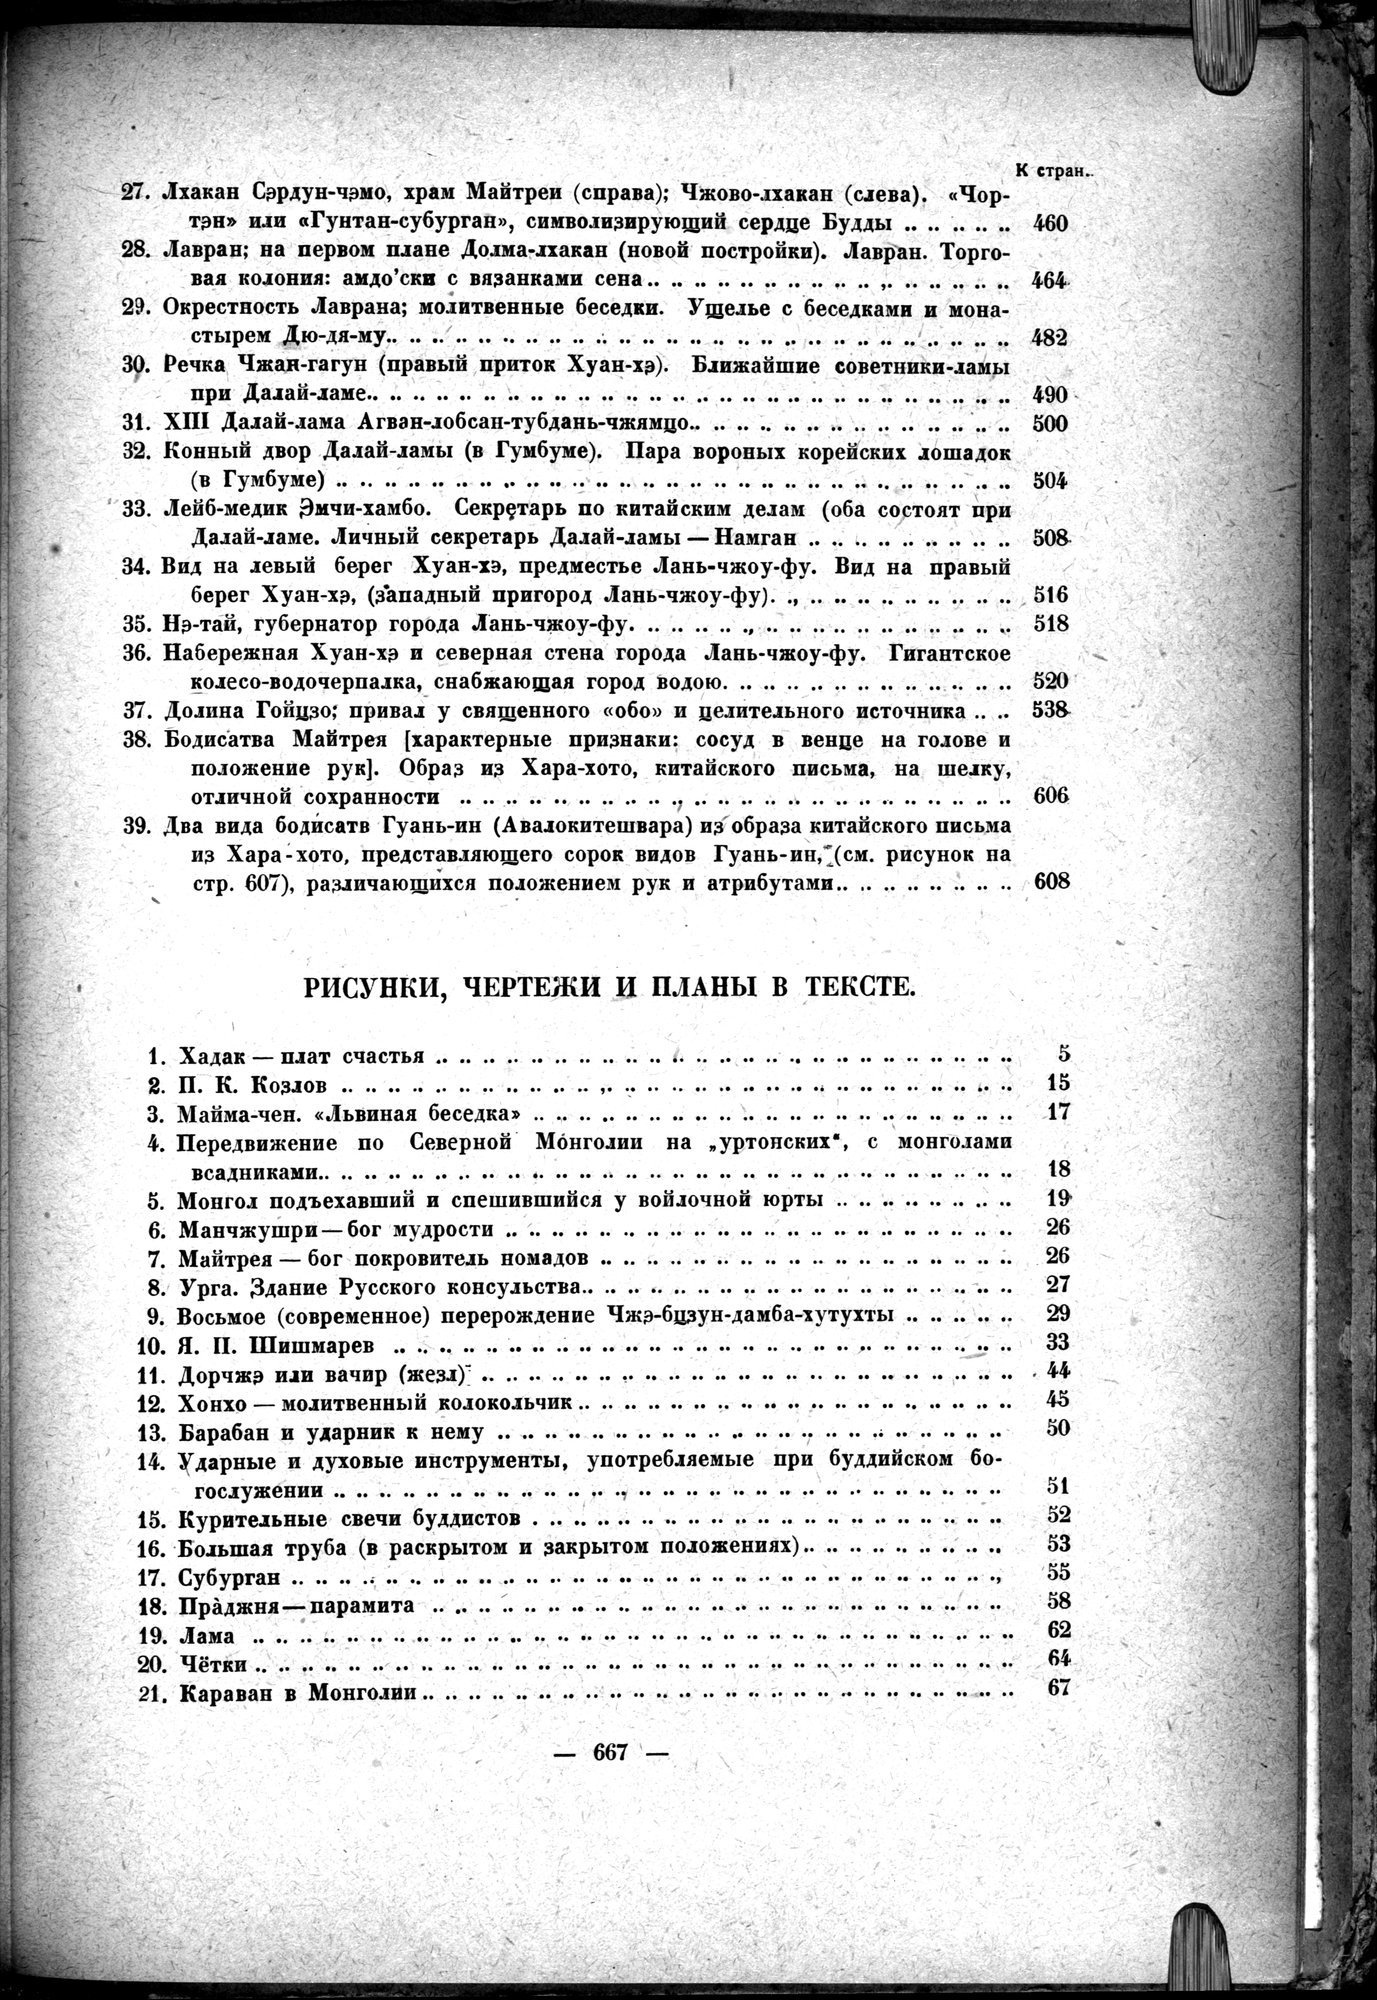 Mongoliya i Amdo i mertby gorod Khara-Khoto : vol.1 / Page 757 (Grayscale High Resolution Image)